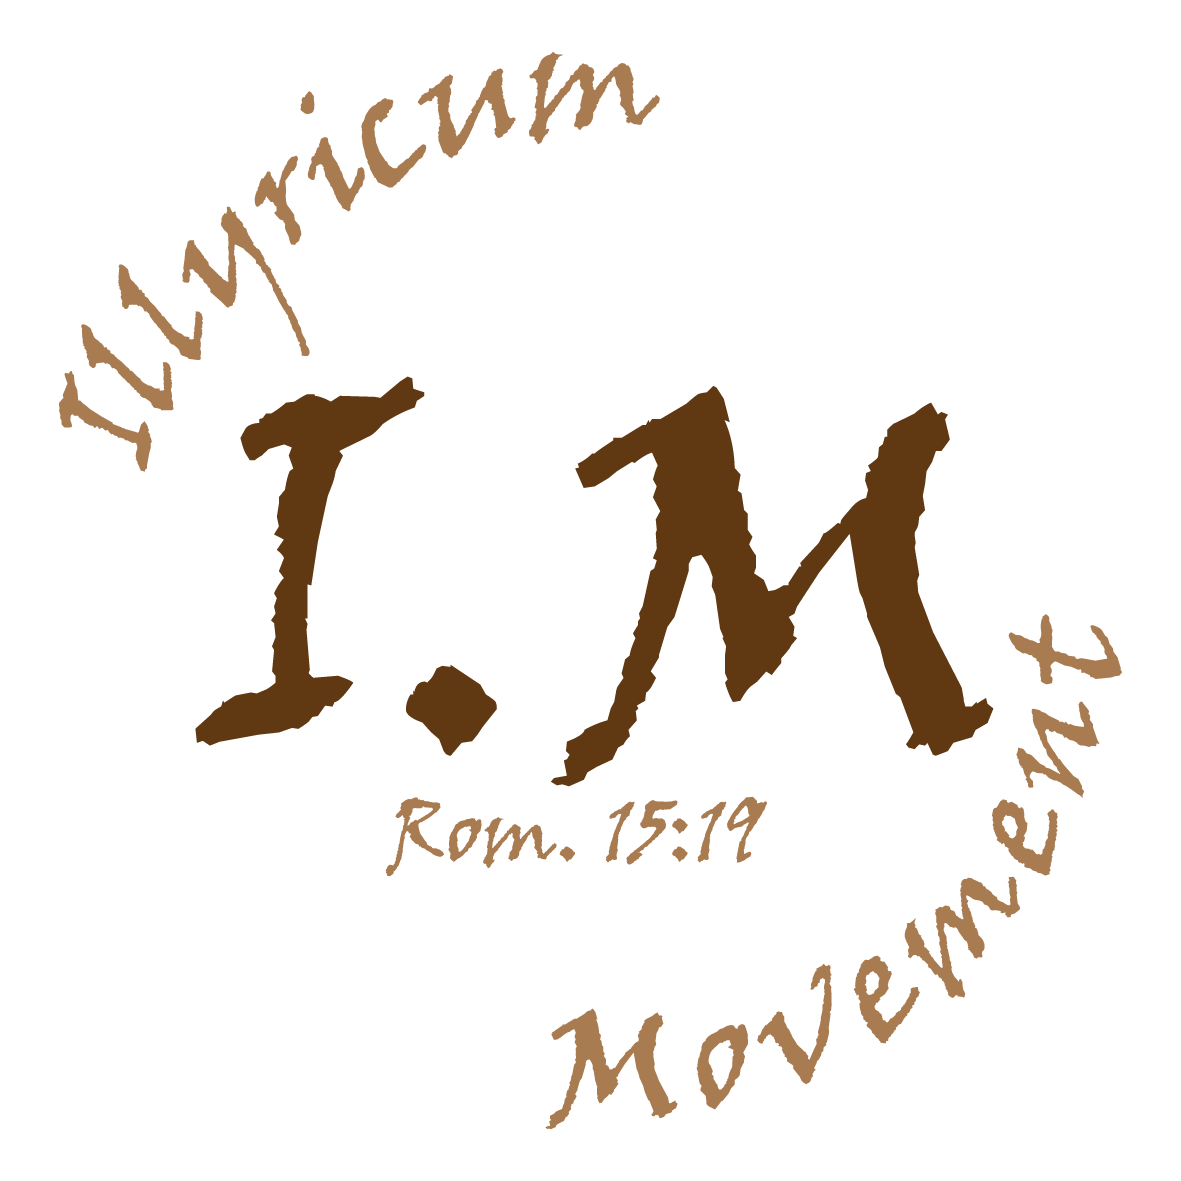 Illyricum Movement